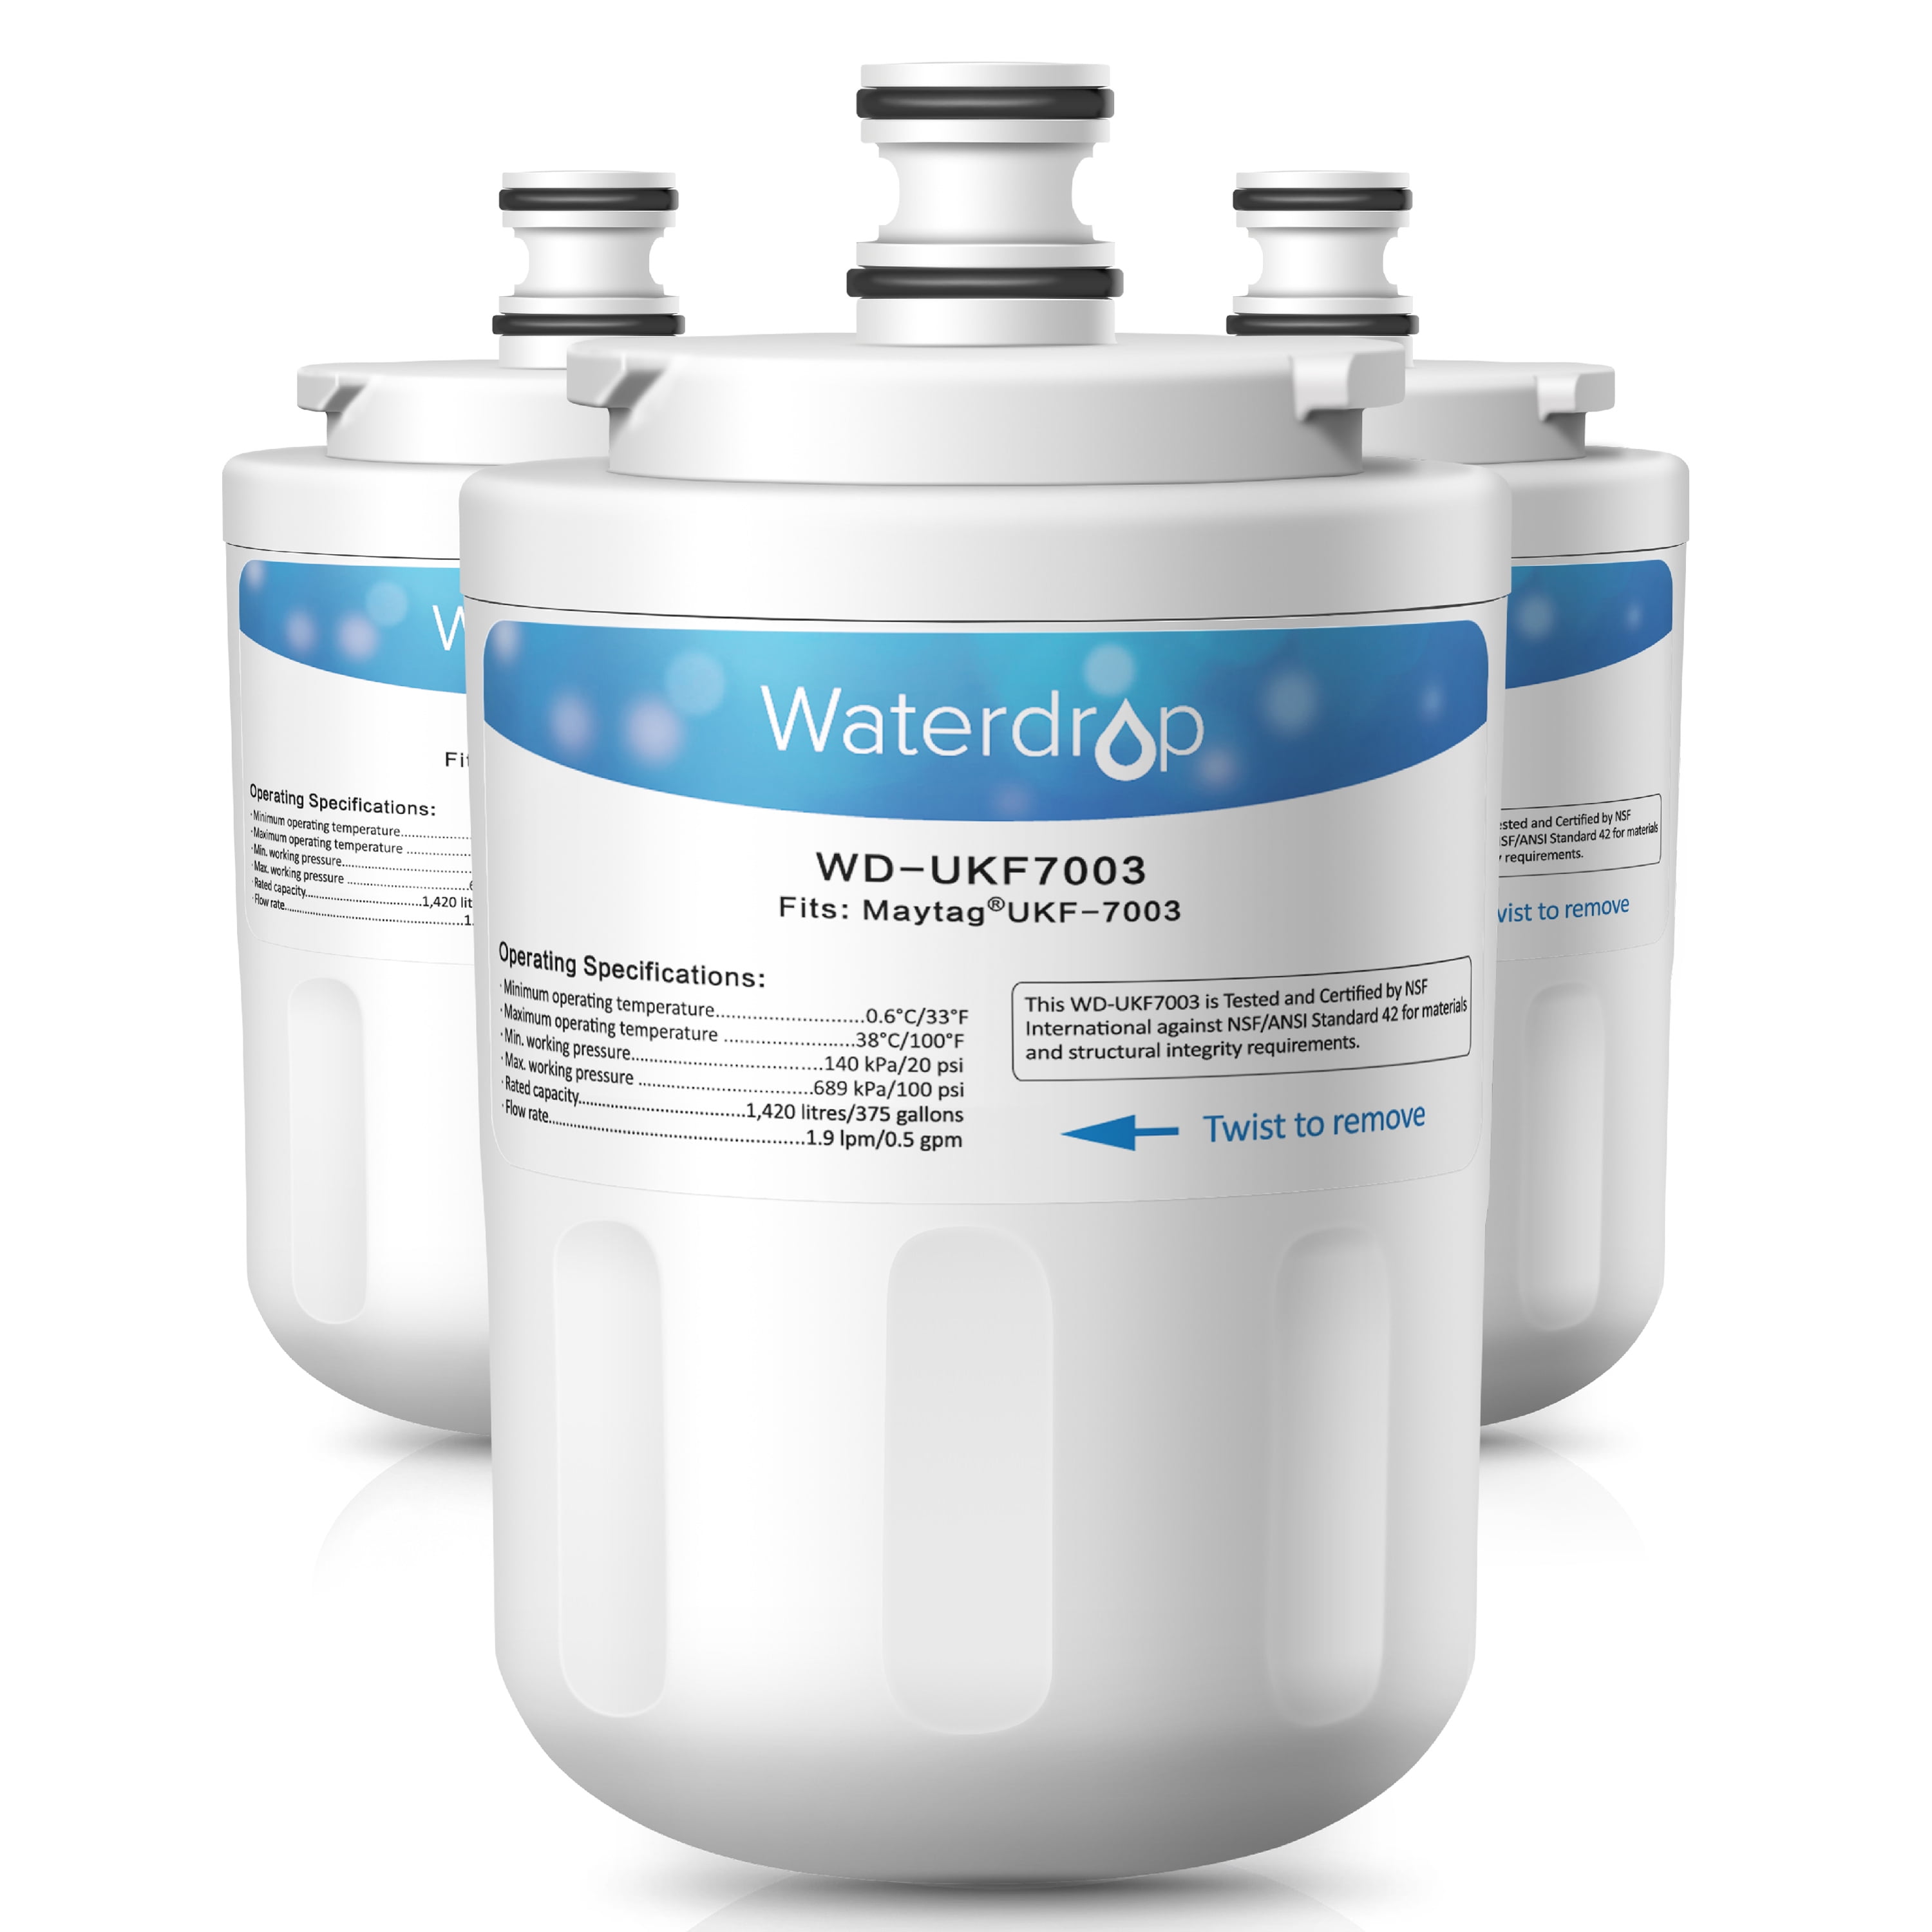 6 Waterdrop Fridge Filter Replacement for Maytag UKF7003 UKF7003/1 EDR7D1 